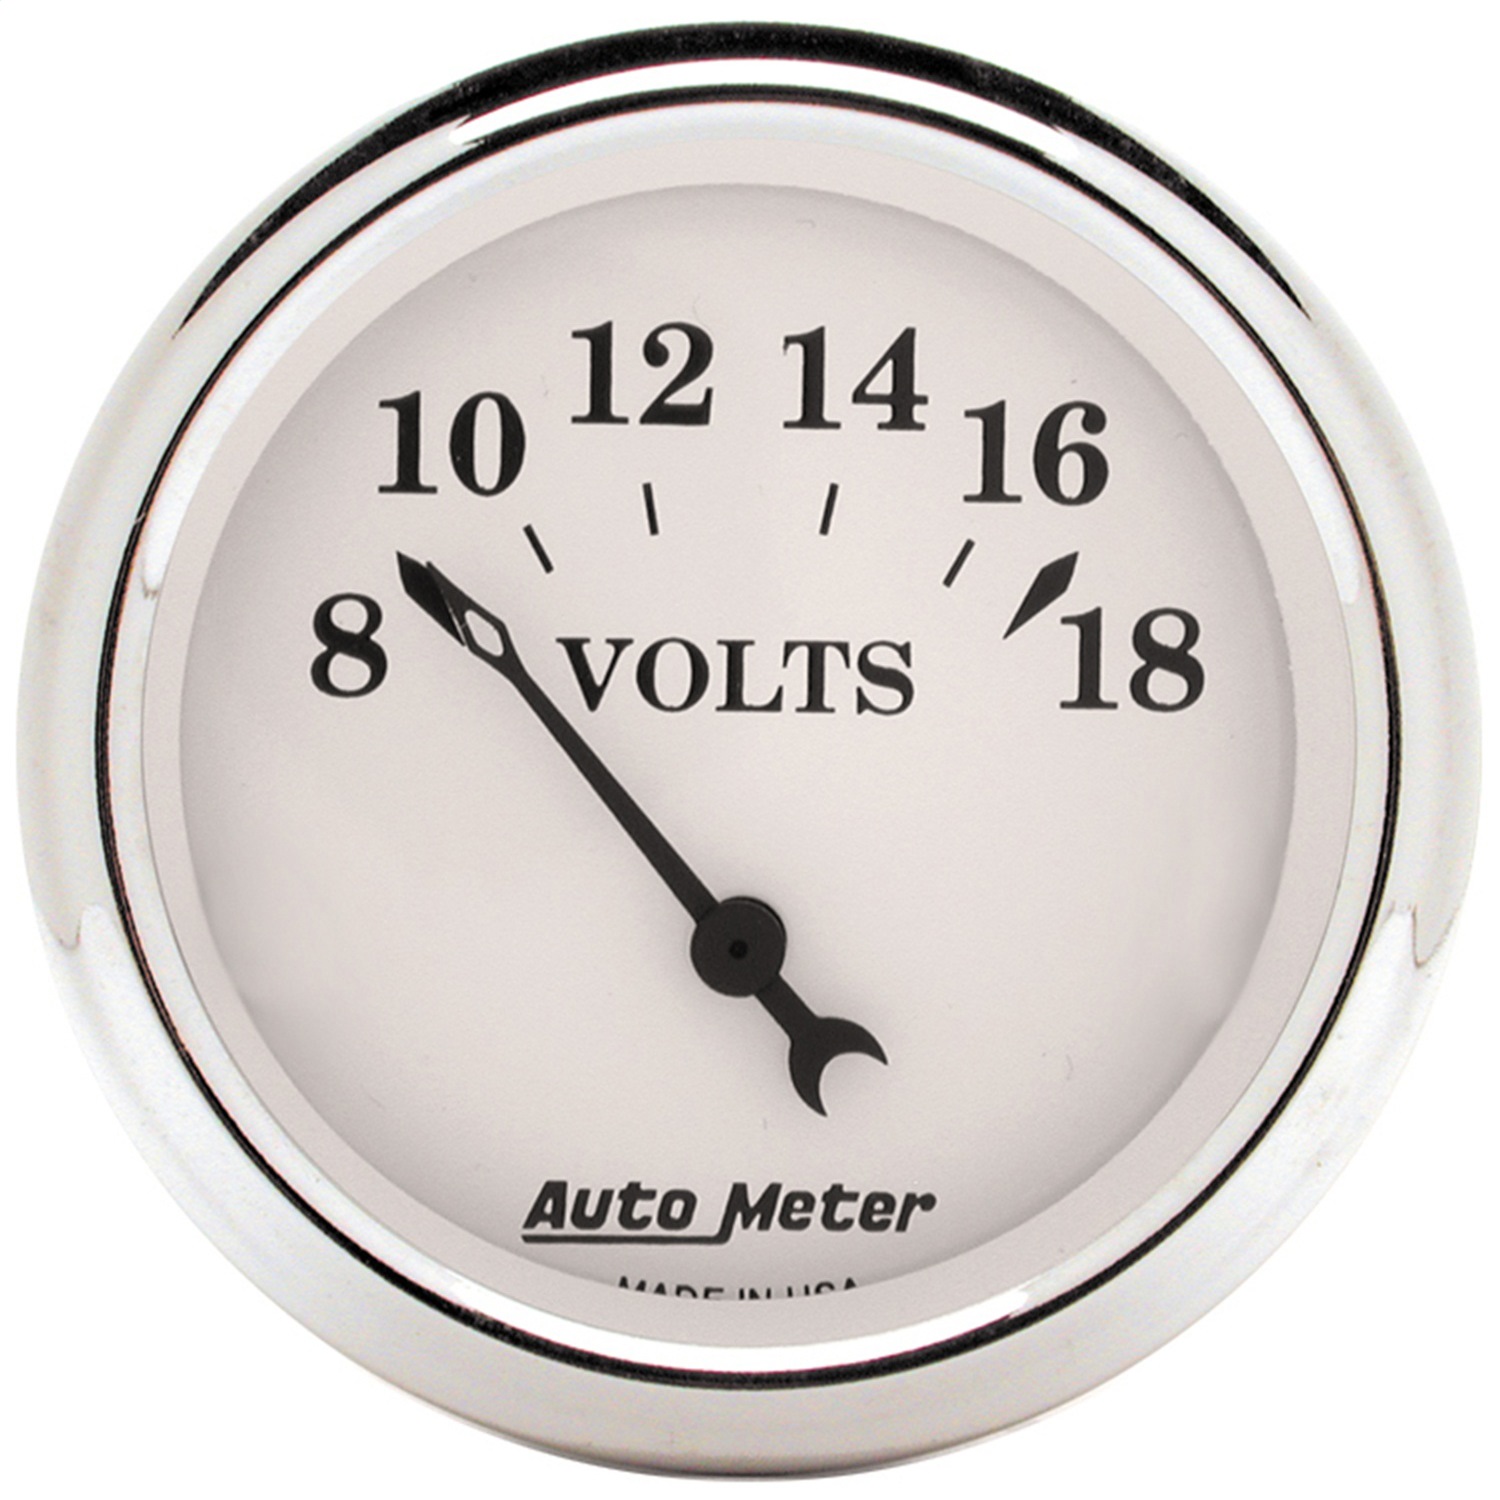 Auto Meter Auto Meter 1692 Old Tyme White; Voltmeter Gauge